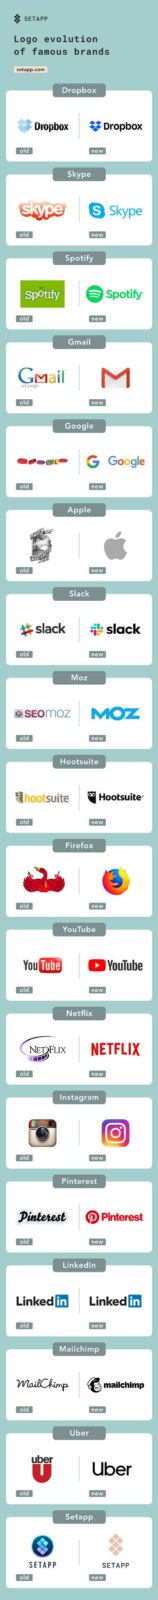 The logo evolution of famous brands